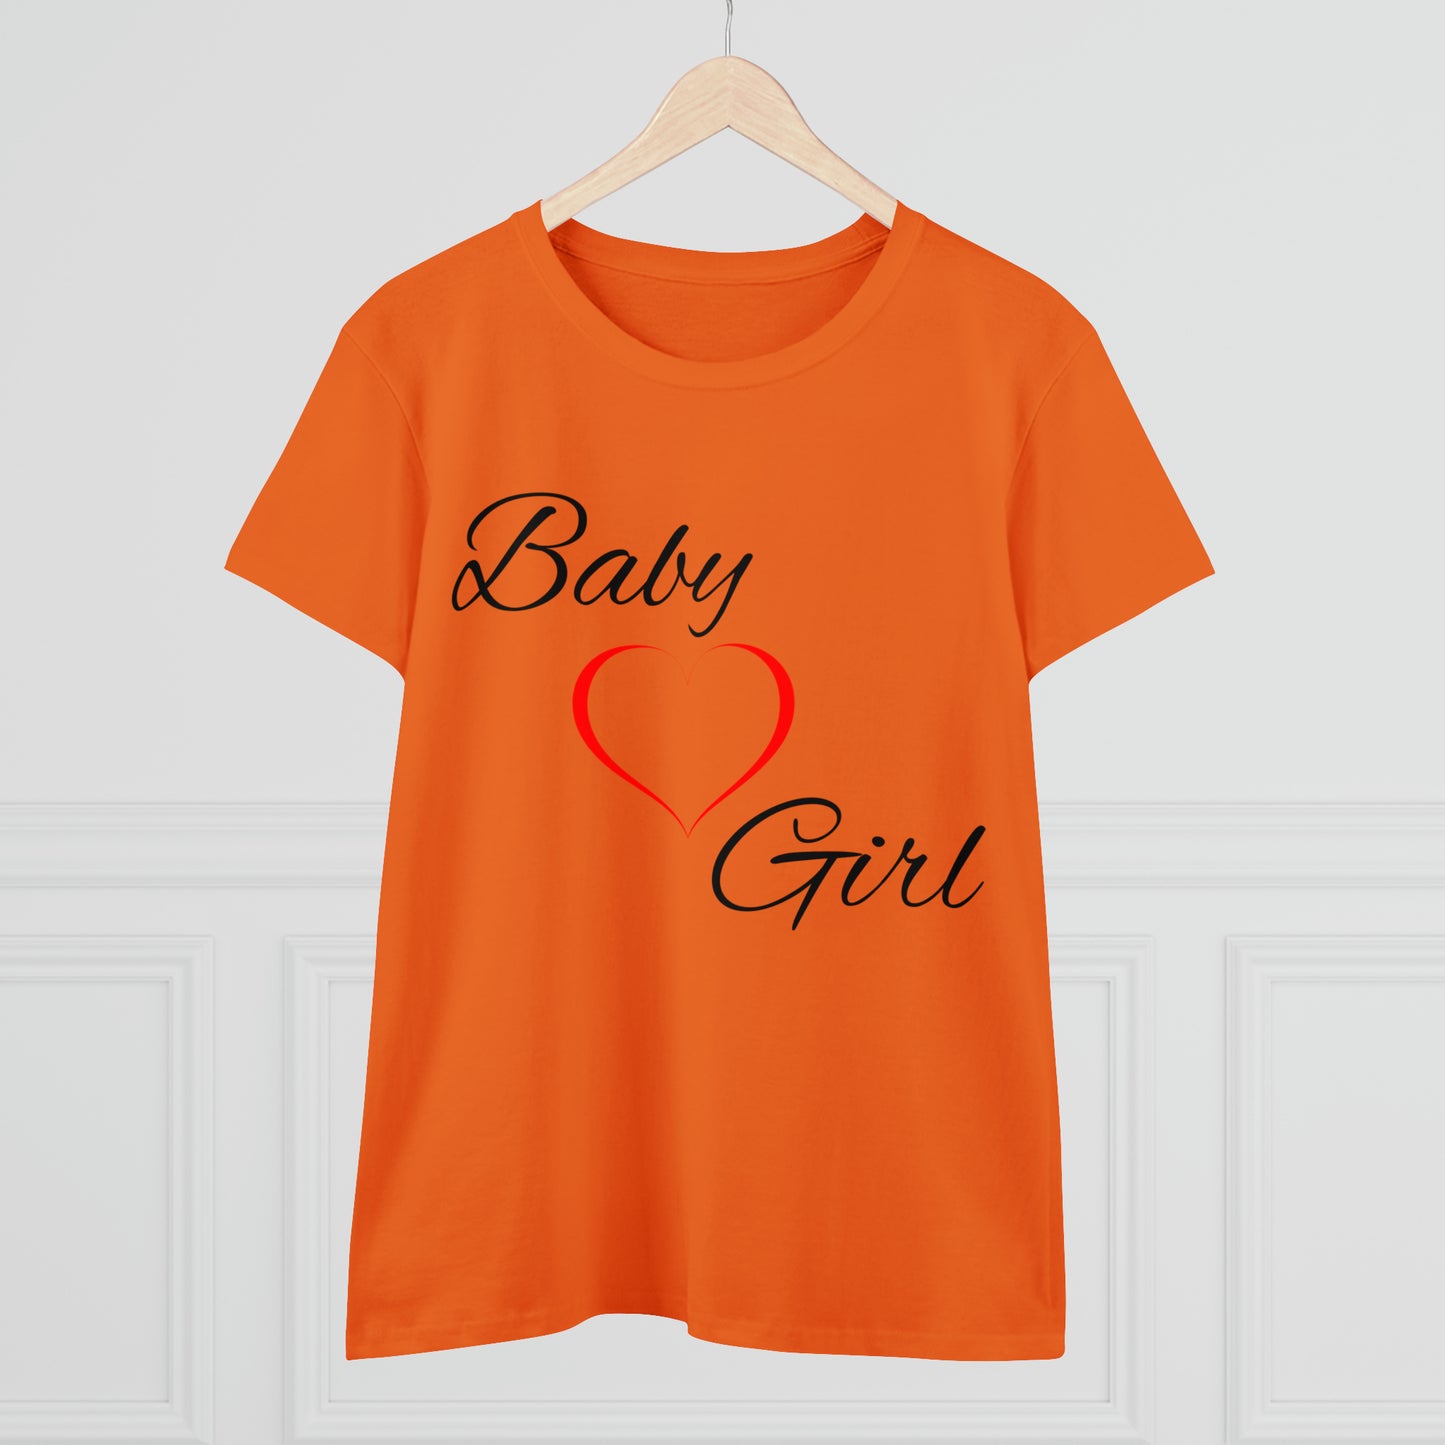 Baby Girl - Women's Midweight Cotton Tee